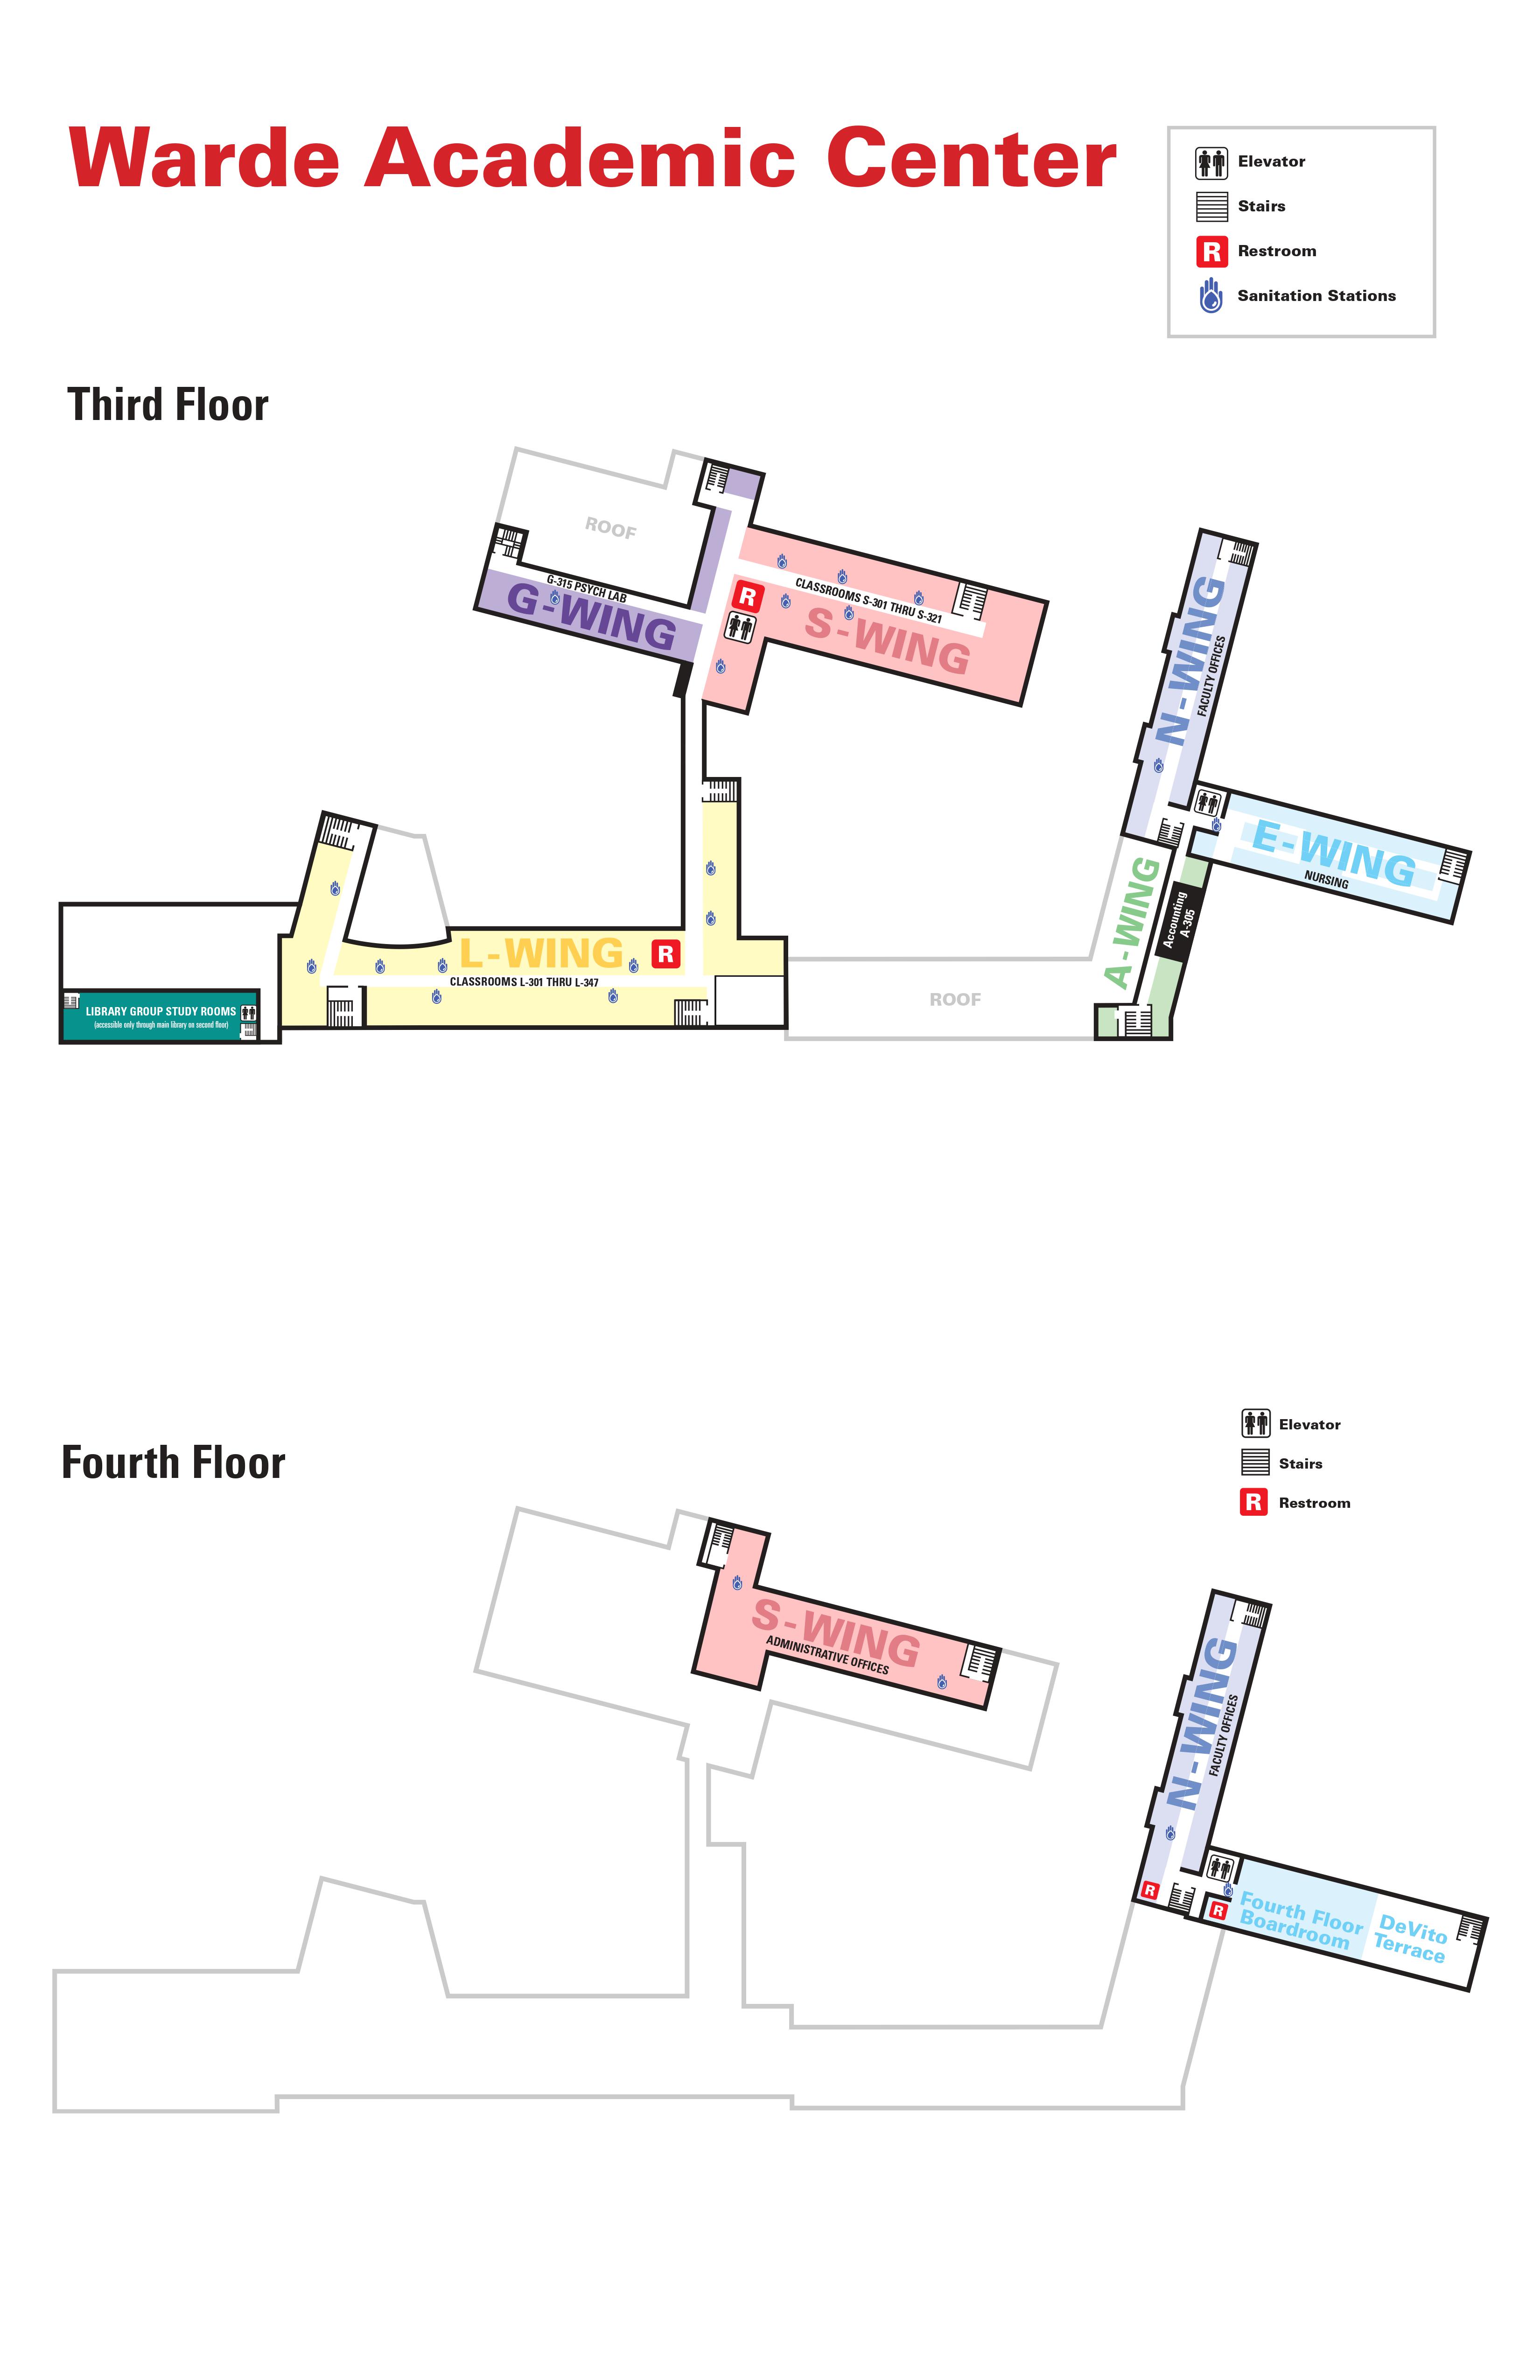 Warde Academic Center Map, Floors 3-4